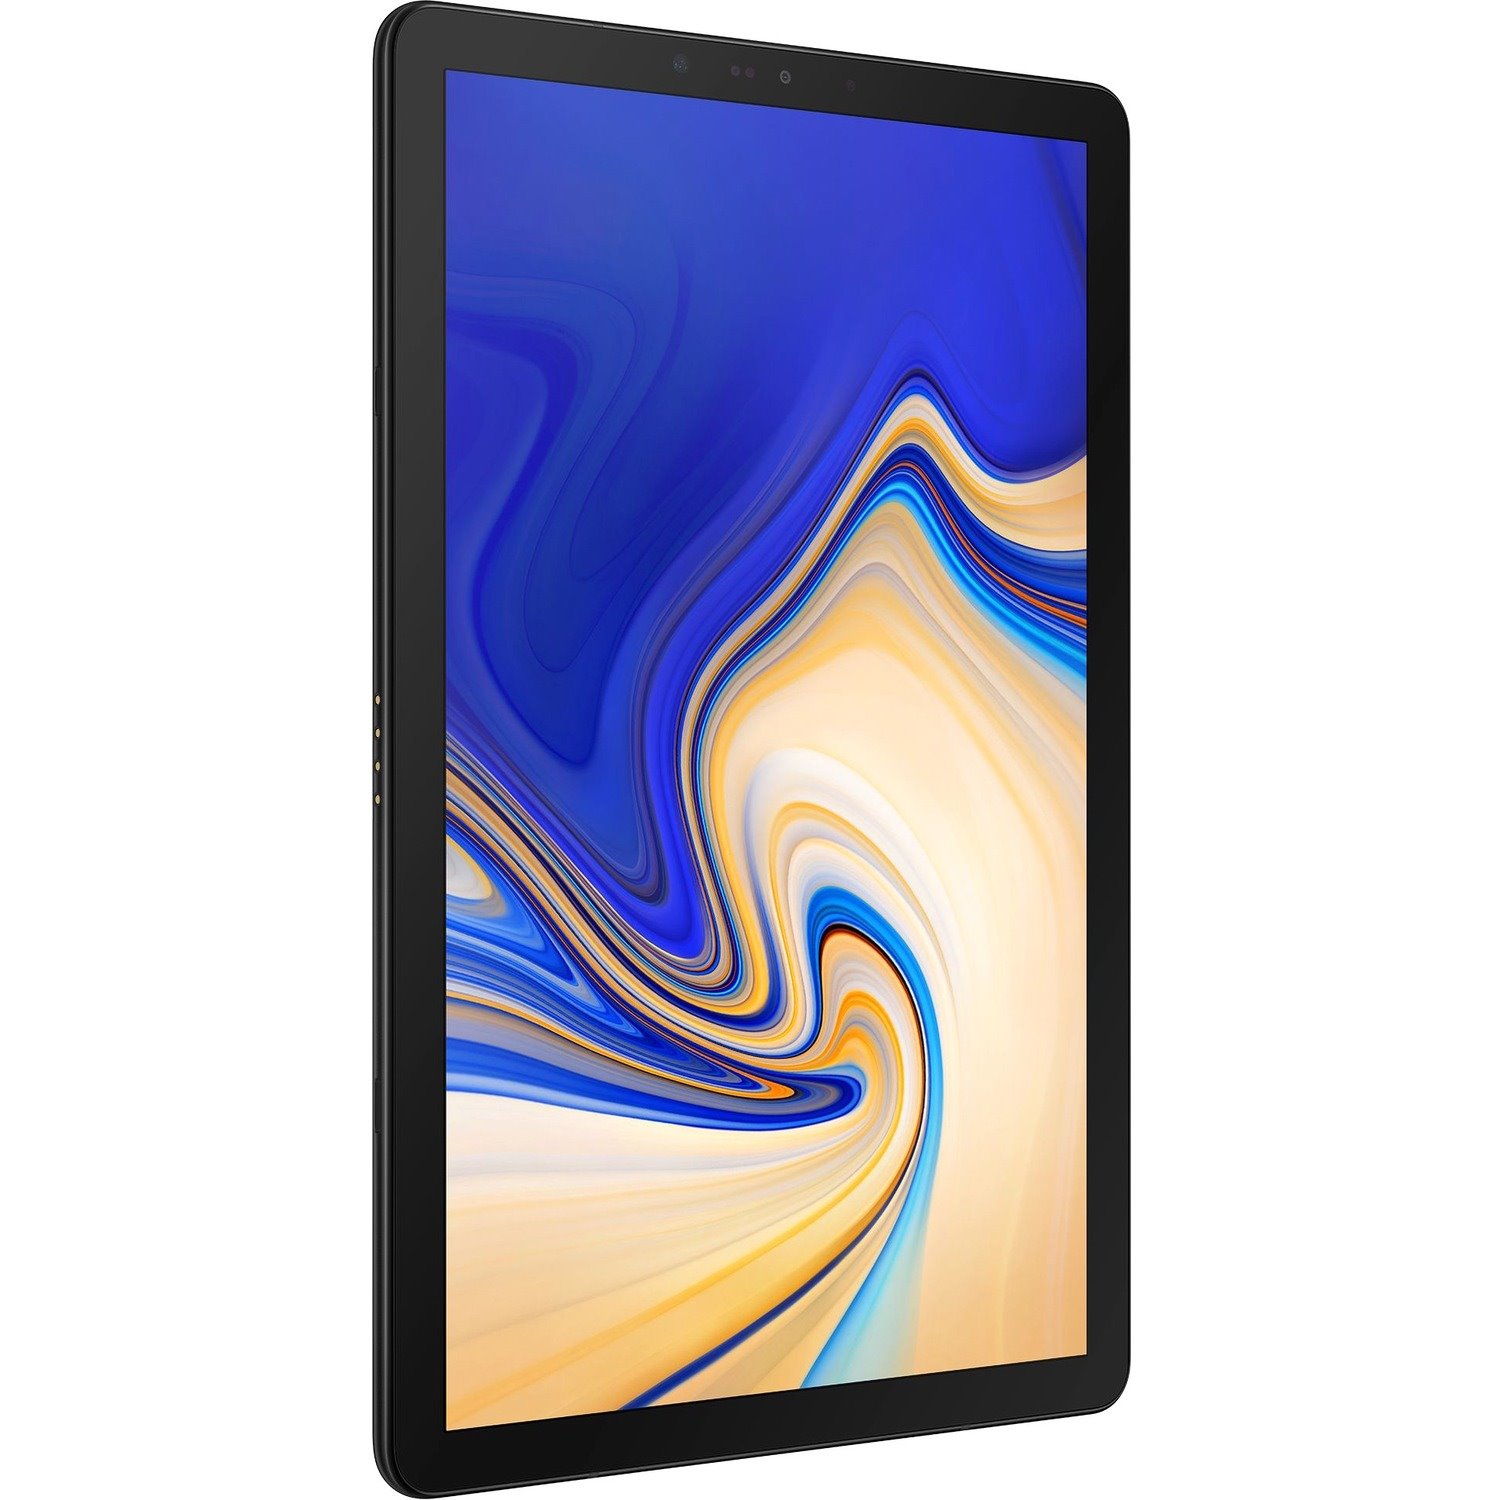 Samsung Galaxy Tab S4 SM-T835 Tablet - 10.5" - Octa-core (8 Core) 2.35 GHz 1.90 GHz - 4 GB RAM - 64 GB Storage - Android 8.1 Oreo - 4G - Black